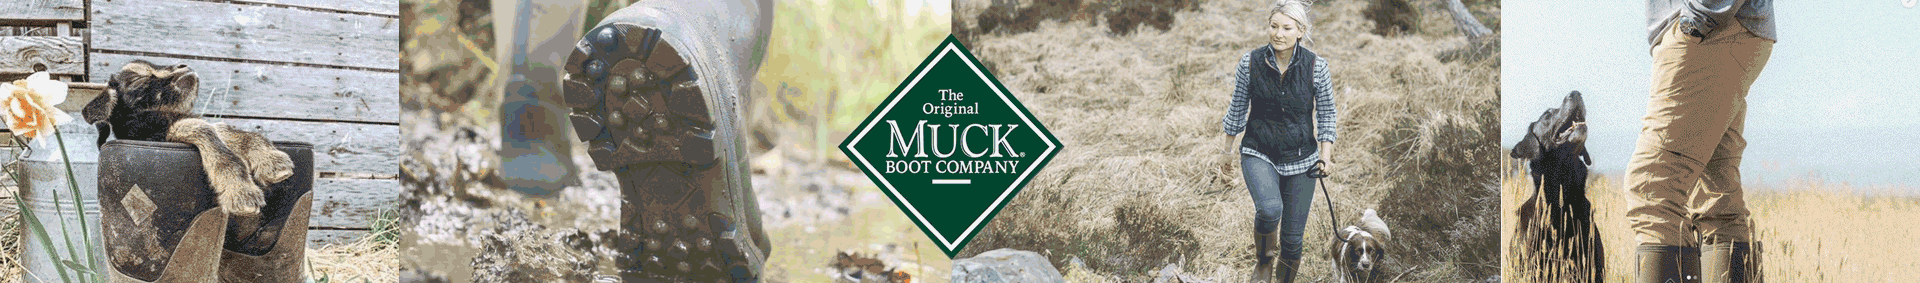 Shop Muck Boots Company